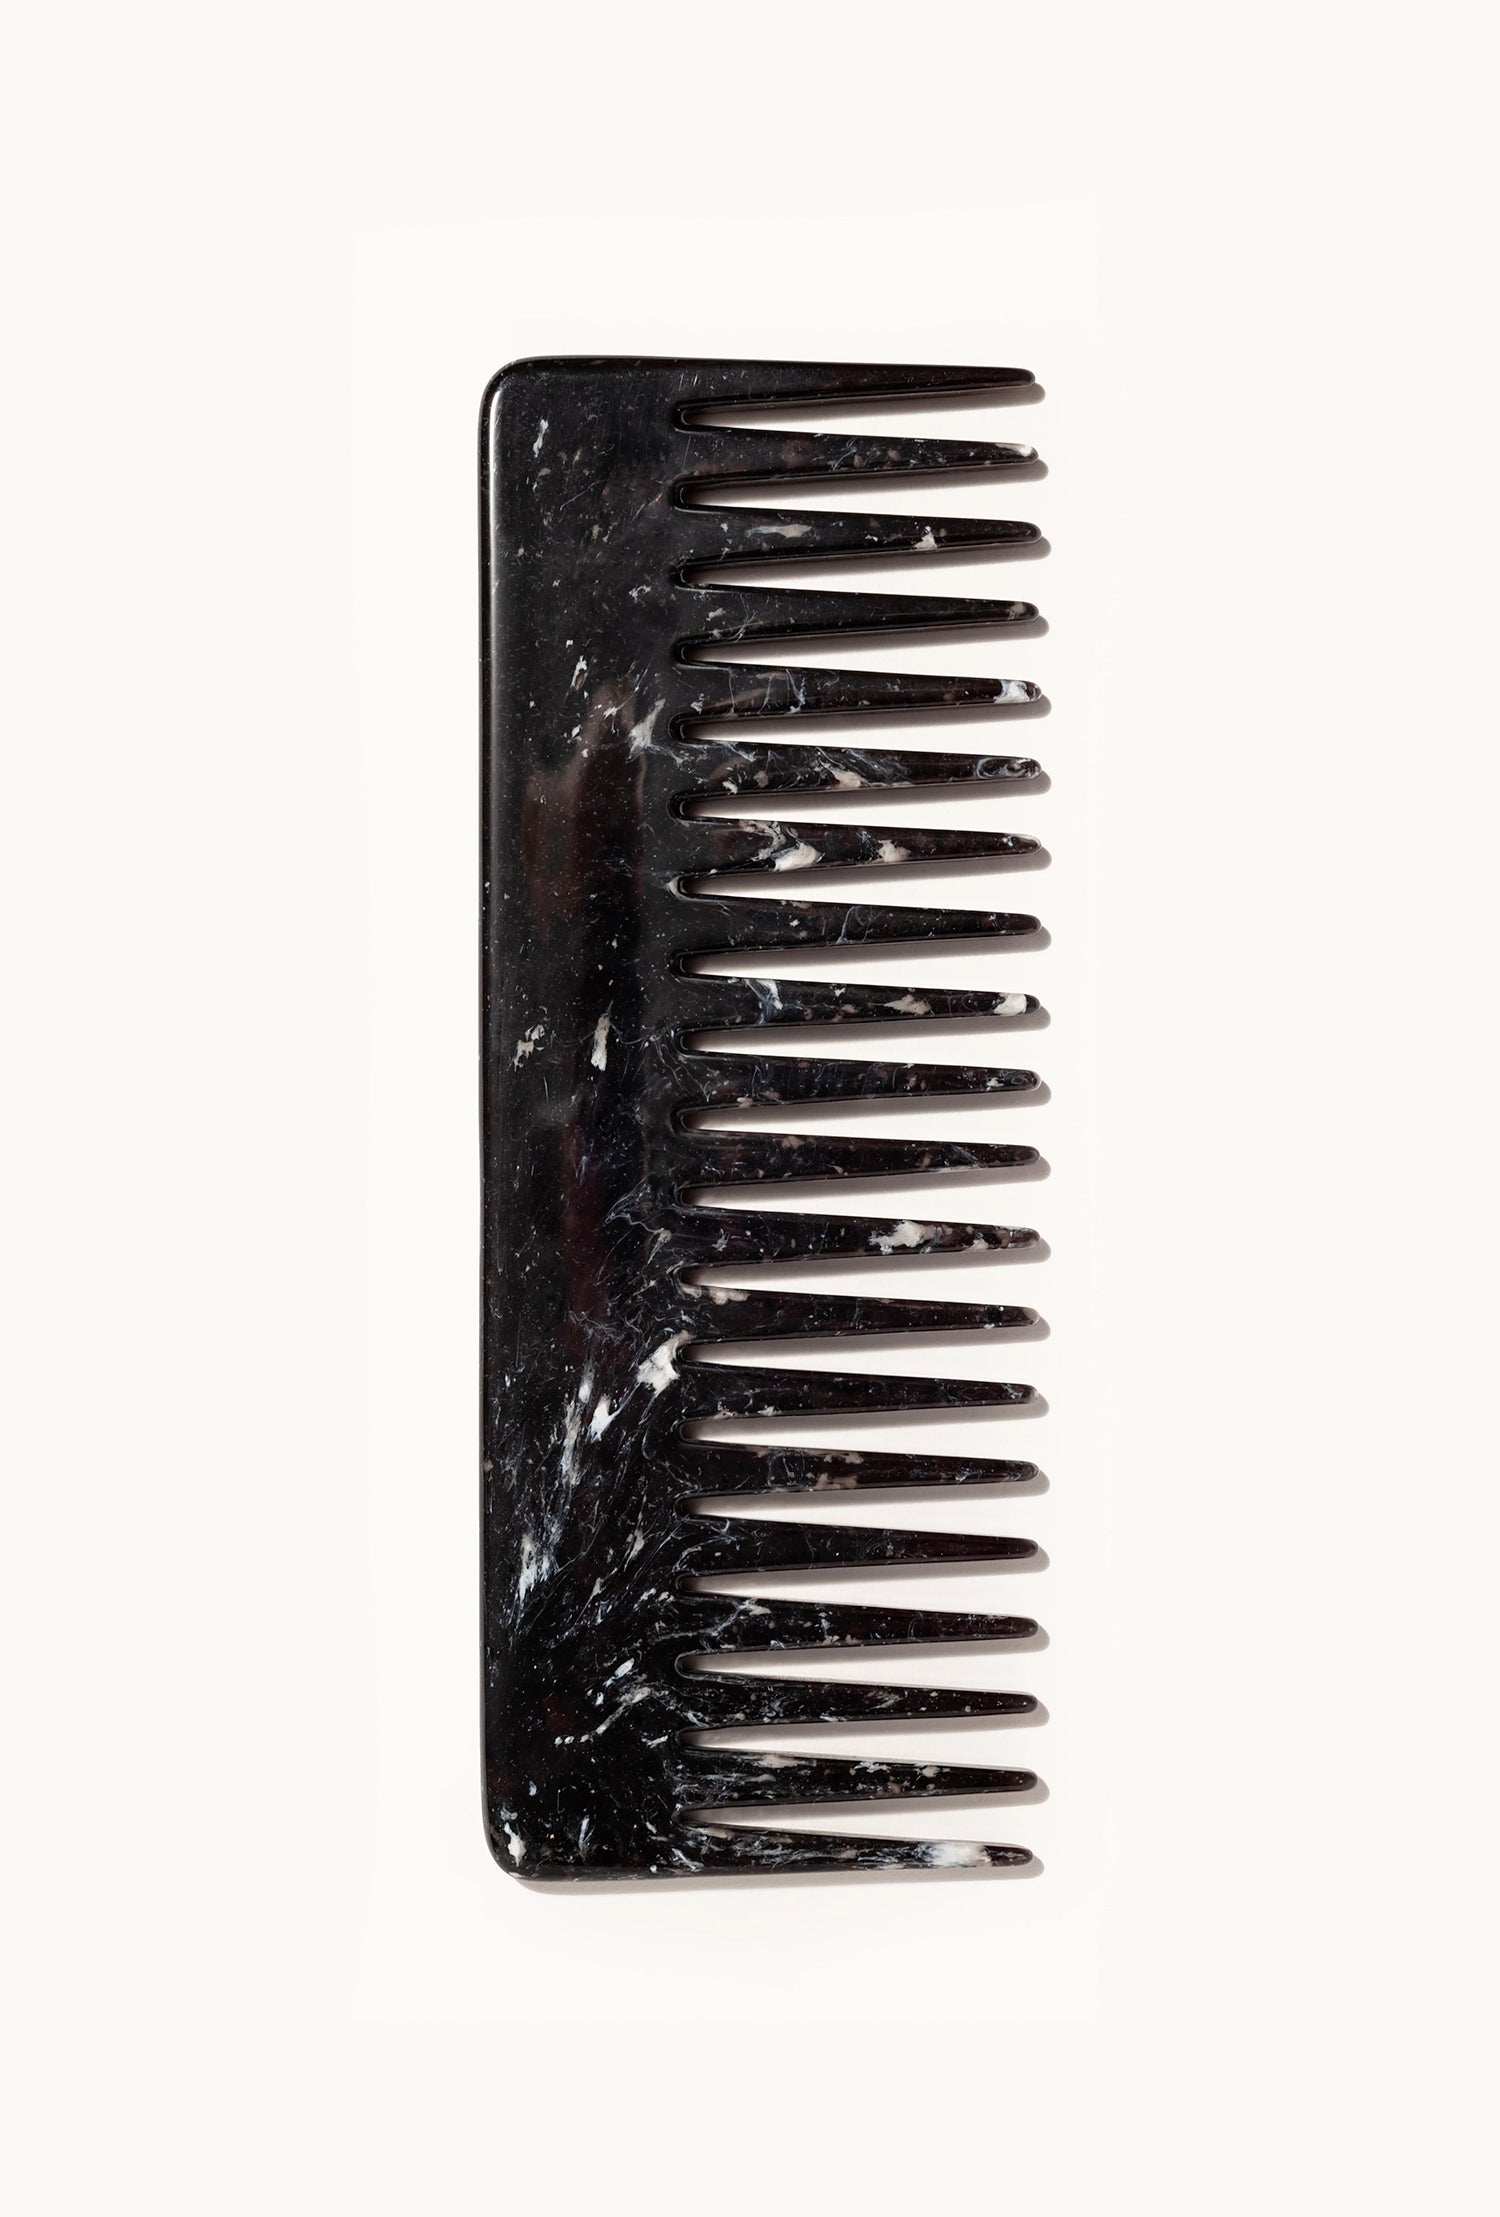 Rake Comb